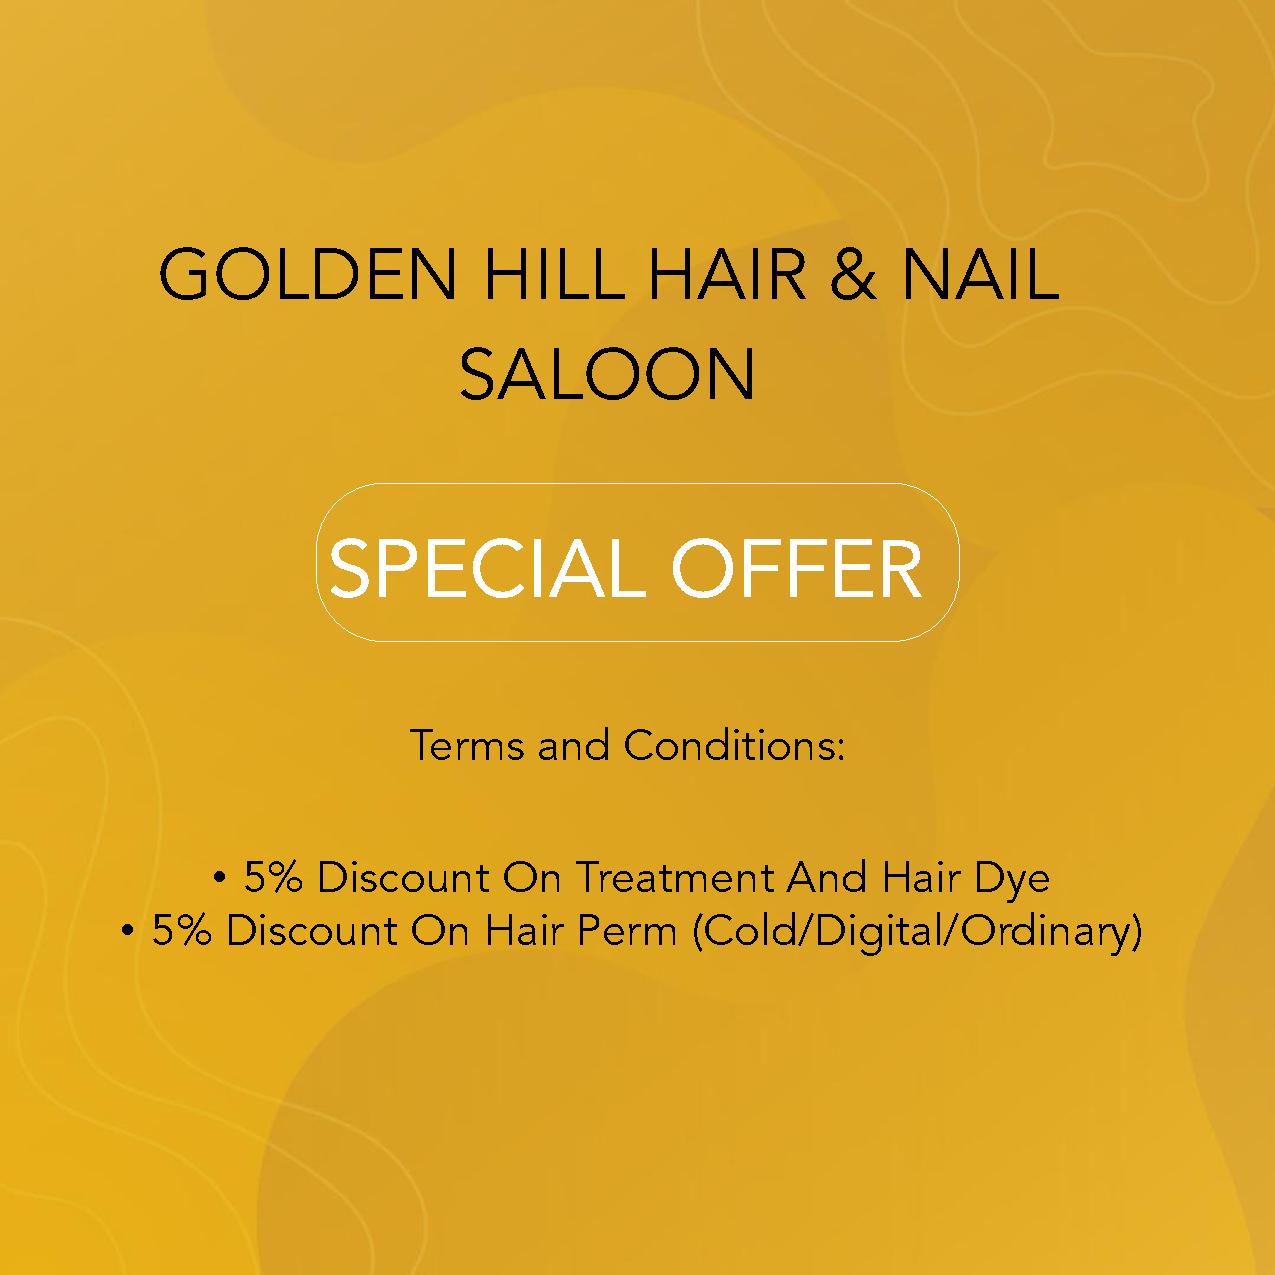 GOLDEN HILL HAIR & NAIL SALOON